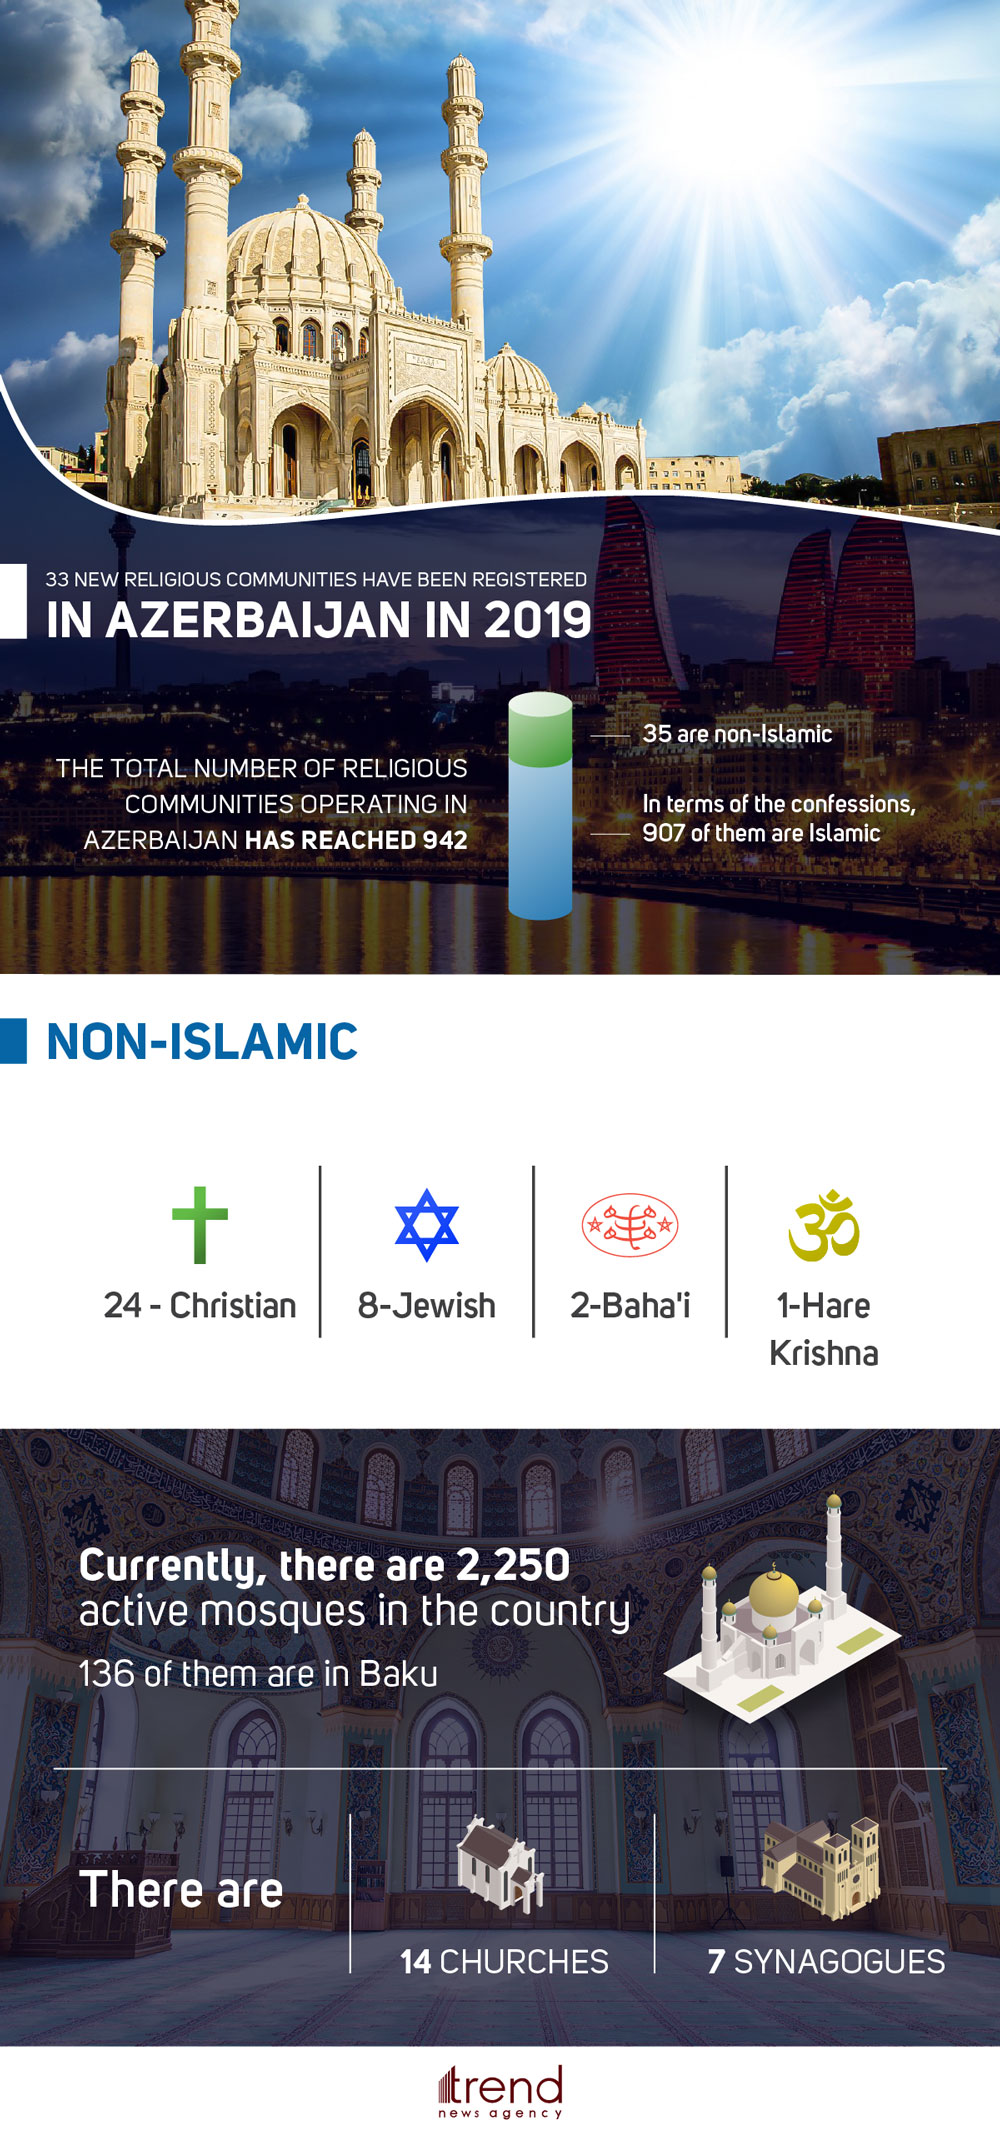 33 new religious communities have been registered in Azerbaijan